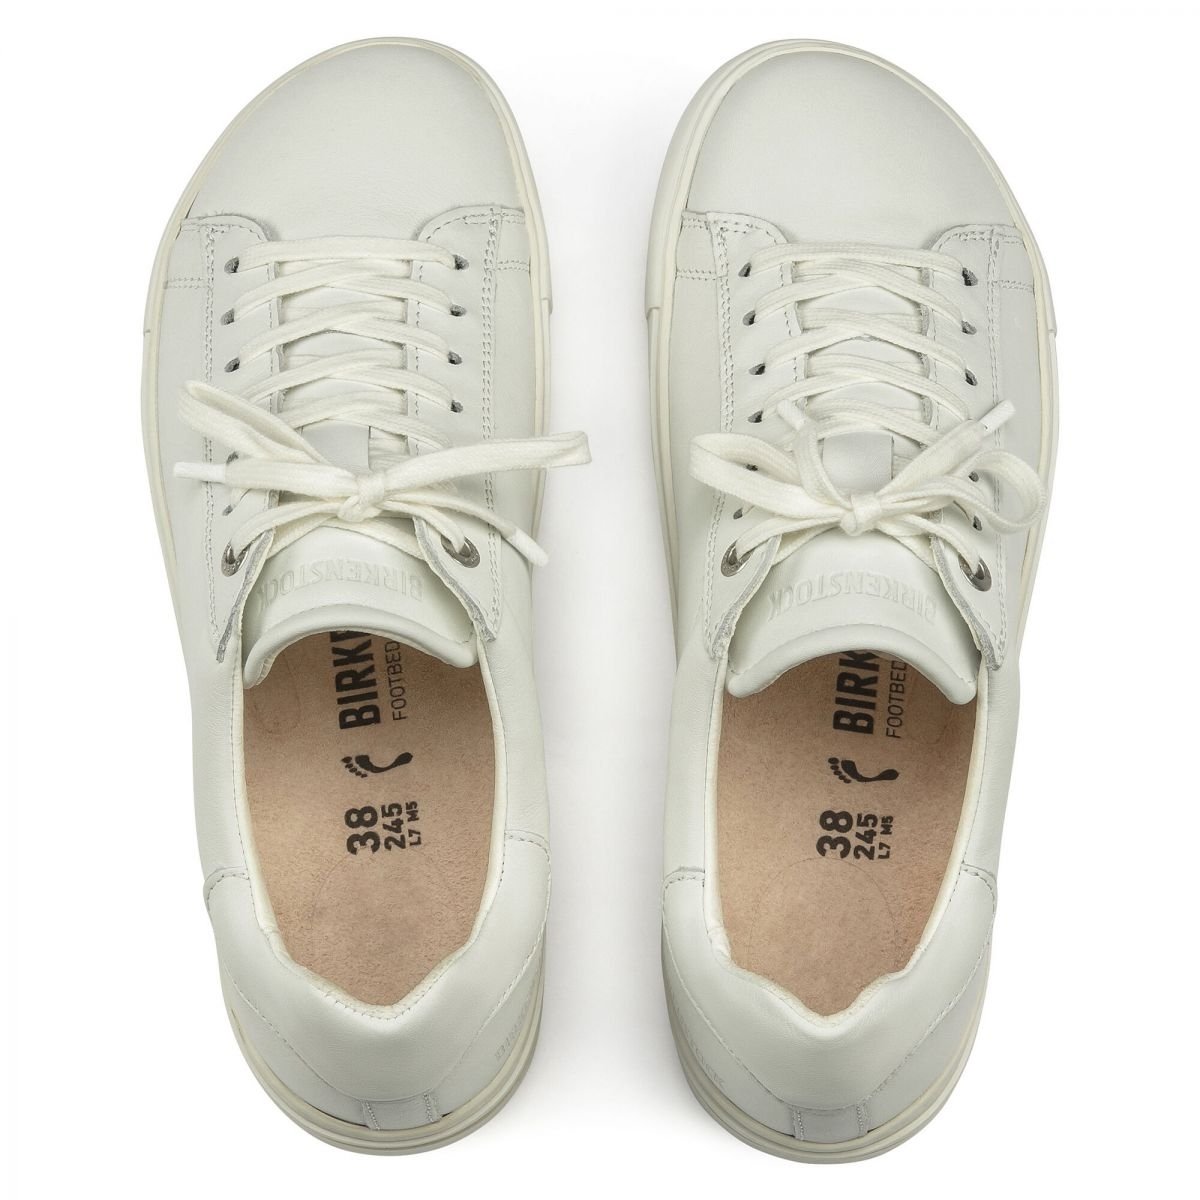 BIRKENSTOCK Unisex Bend Low White Leather Sneaker (regular Width) - 1017723 WHITE - WHITE, 10-10.5 Women/8-8.5 Men